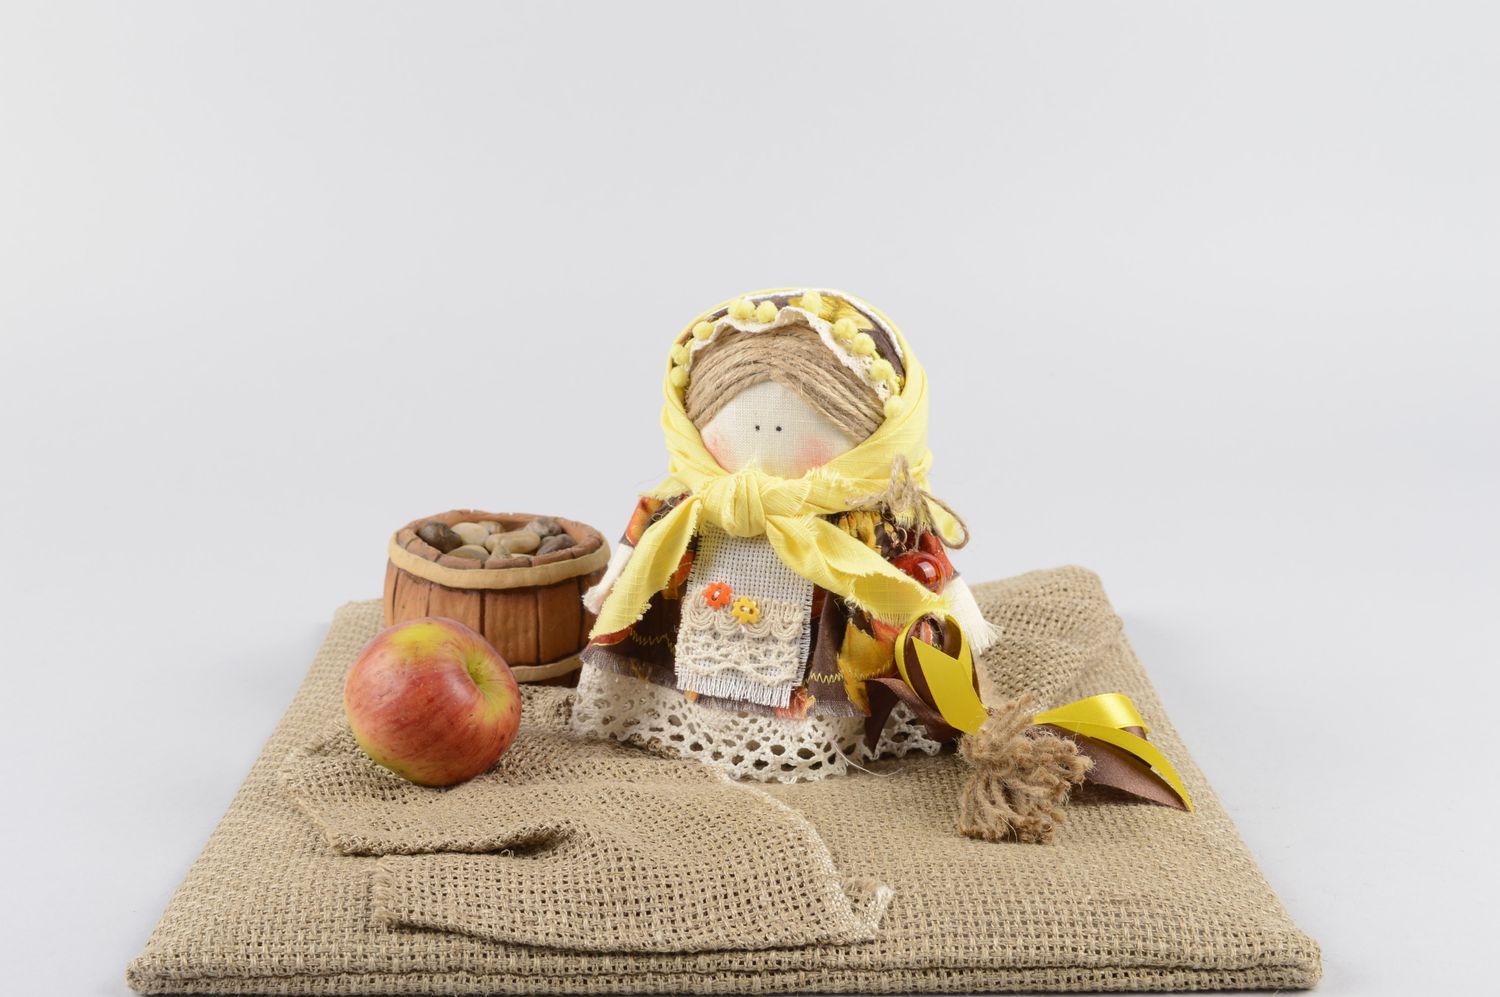 Handmade doll designer doll decorative use only gift ideas interior decor photo 5